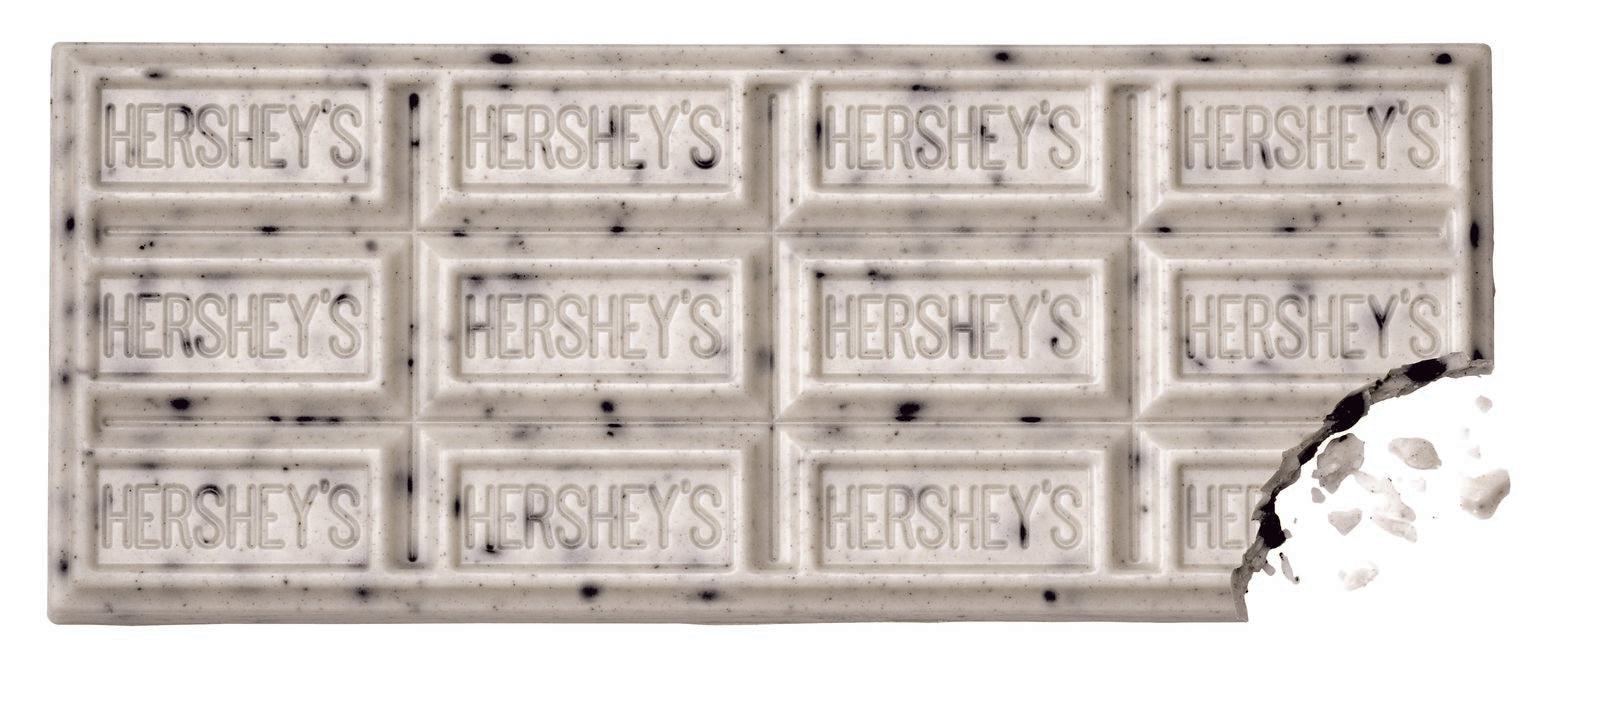 Hershey's Cookies 'N' Creme Giant Candy Bar, 6.5oz